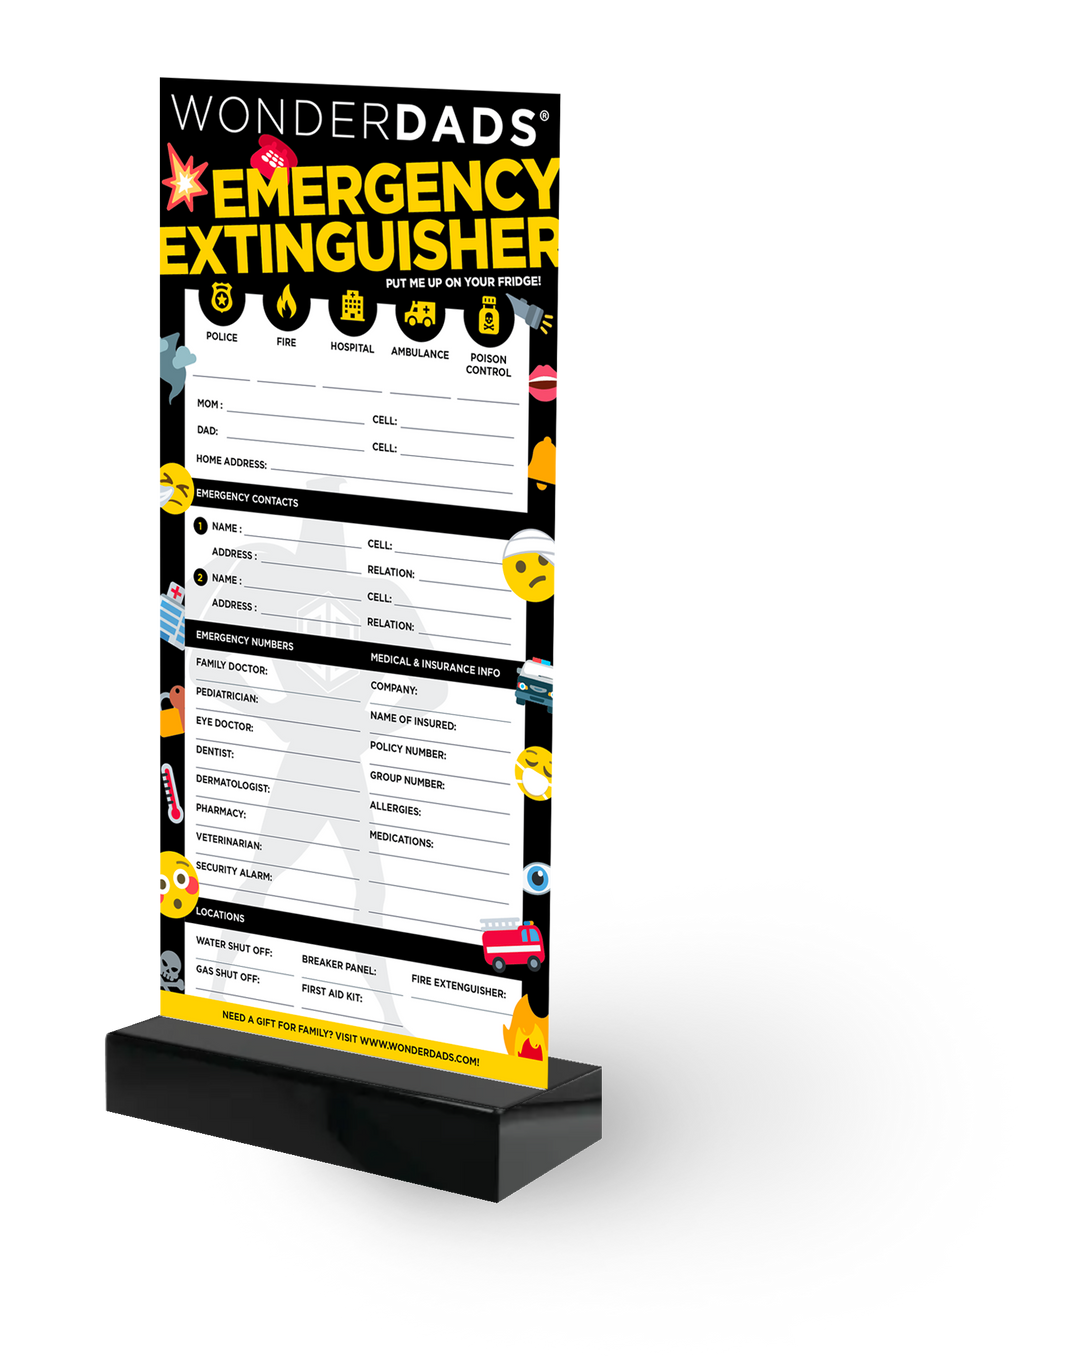 Emergency Extinguisher - Guaranteed to extinguish multiple emergencies during the childhood years!